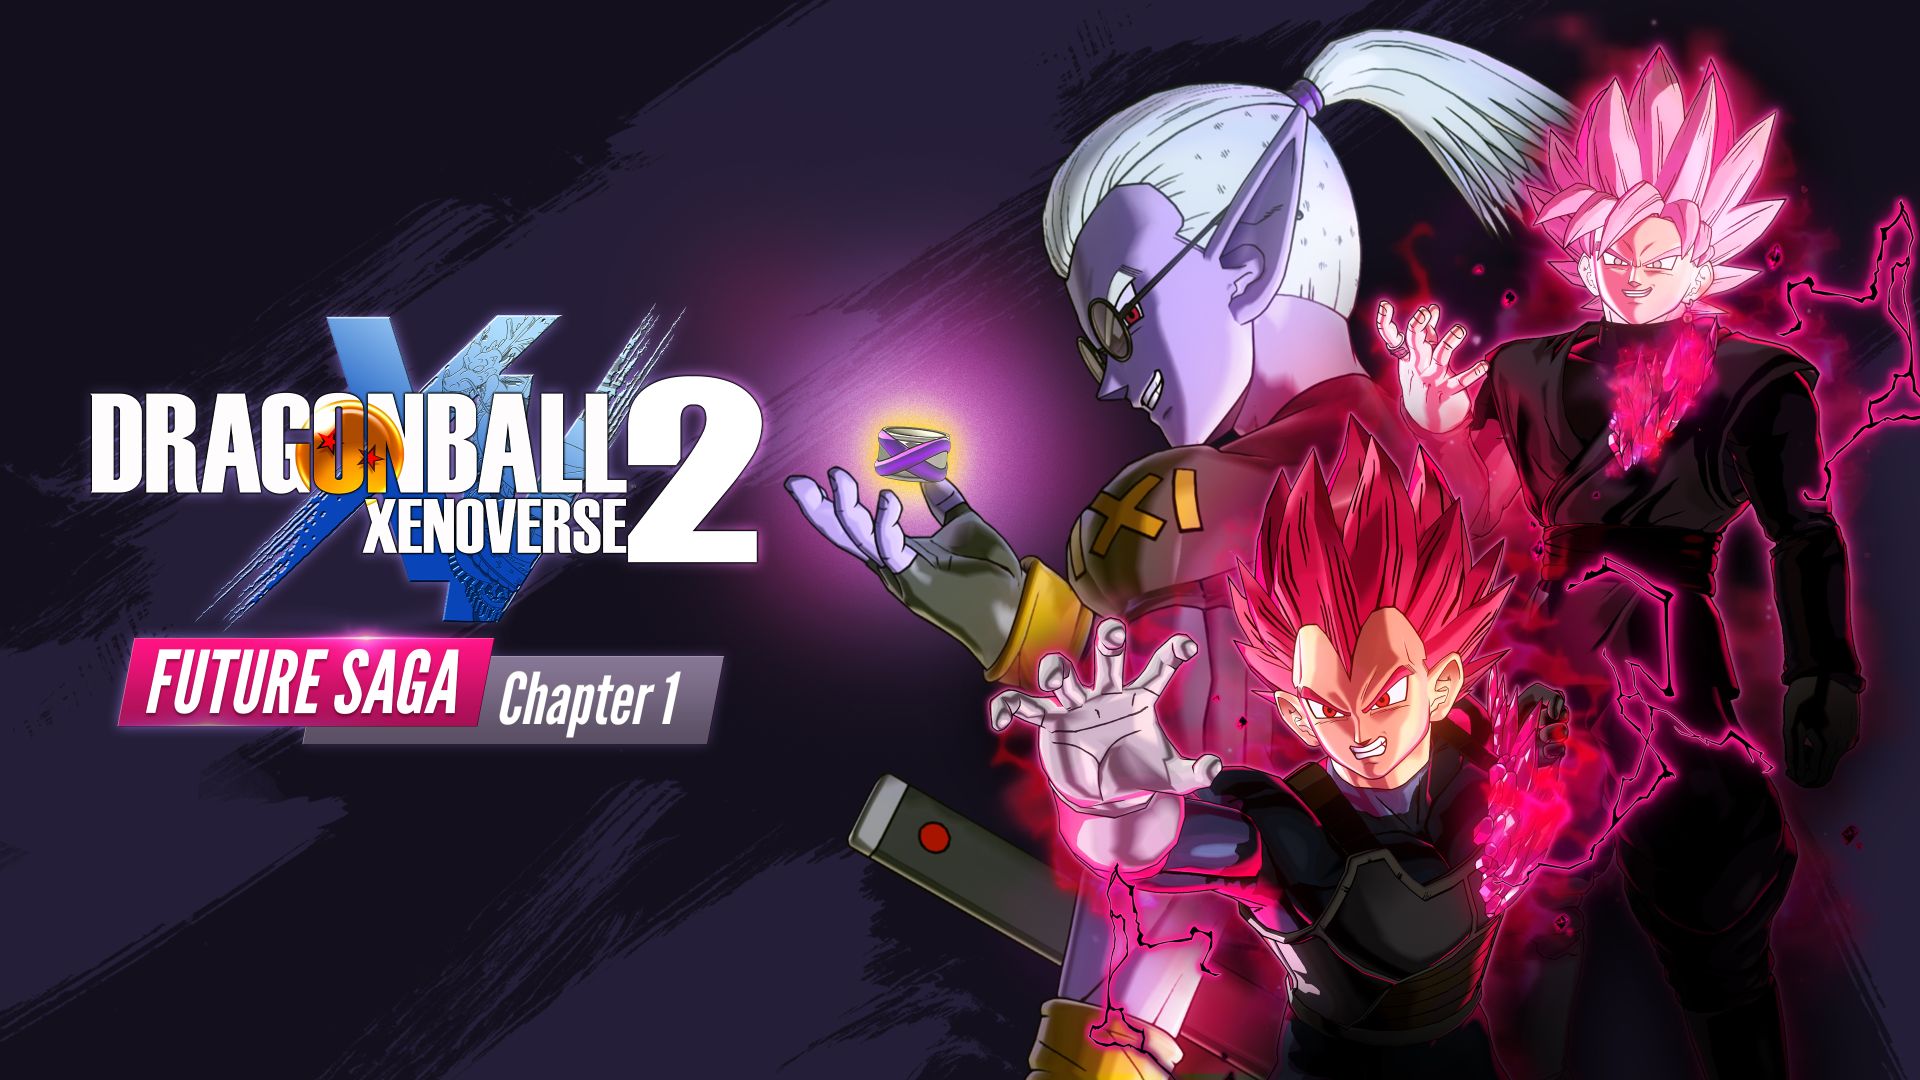 How the Developers of Dragon Ball Xenoverse 2 Introduced Future Saga